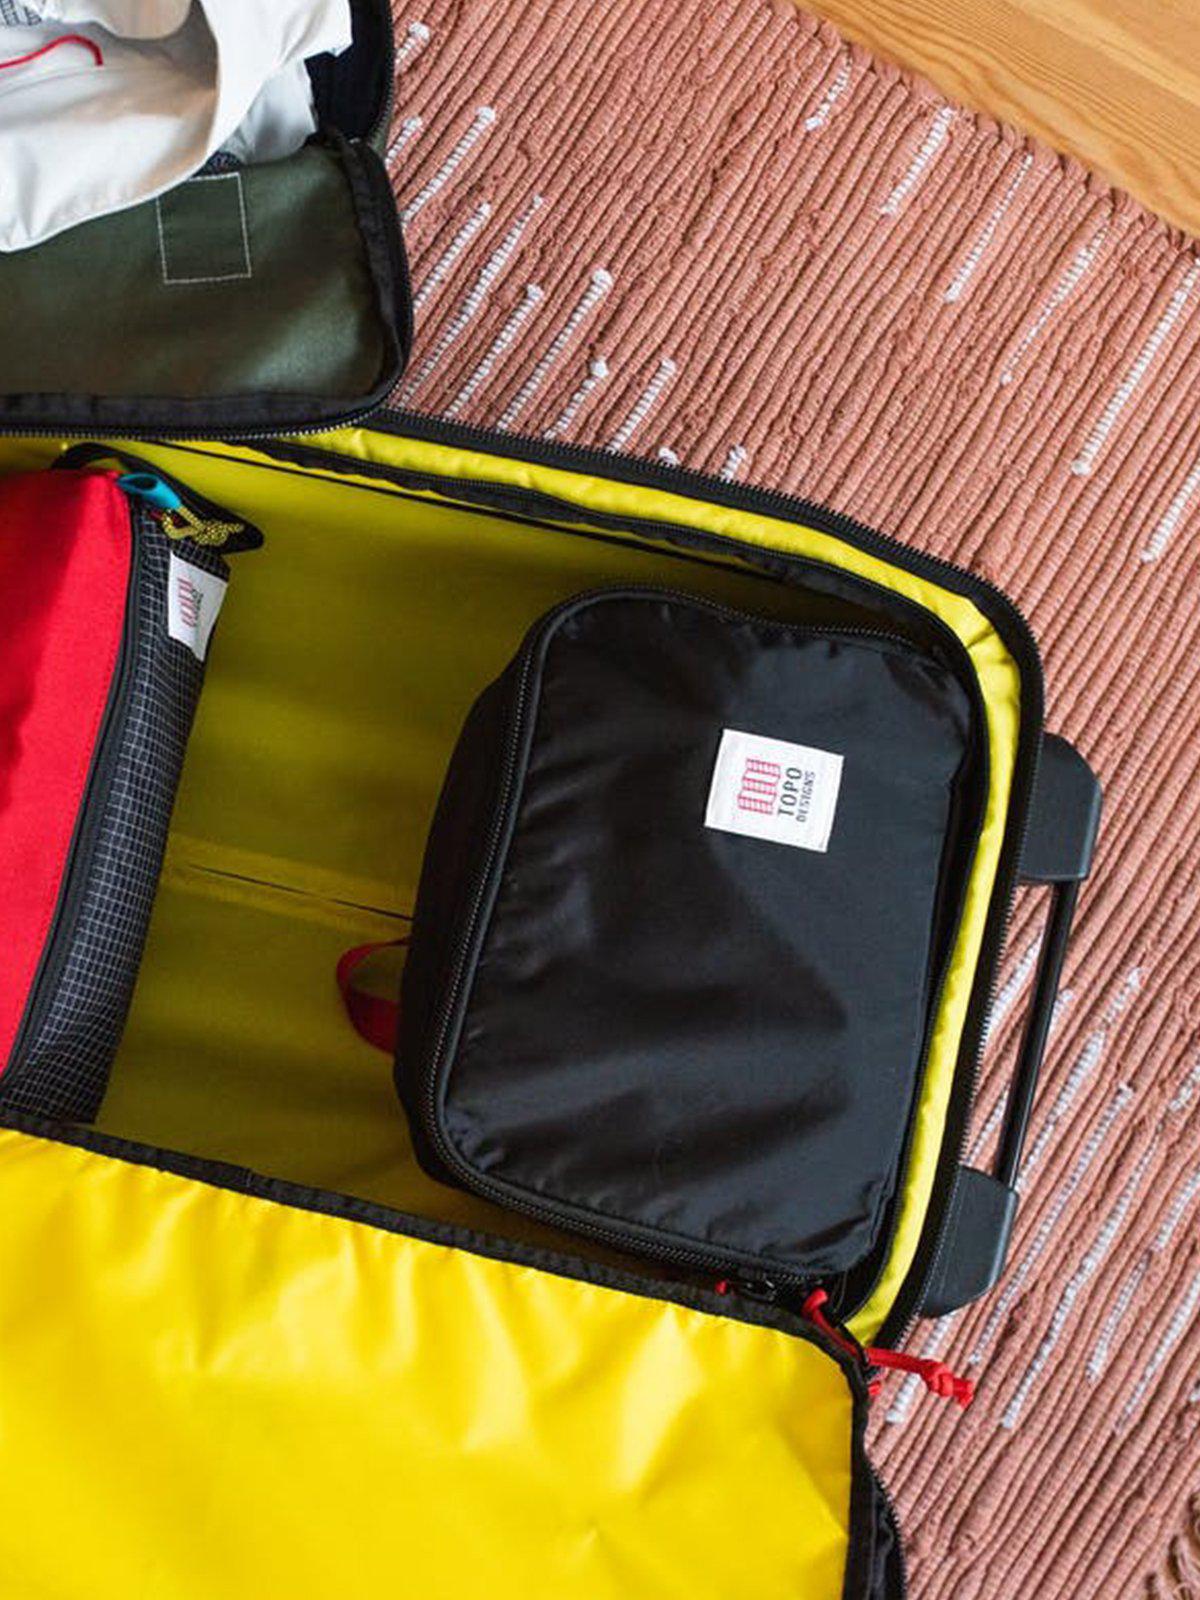 Topo Designs Pack Bag 10L Cube Olive